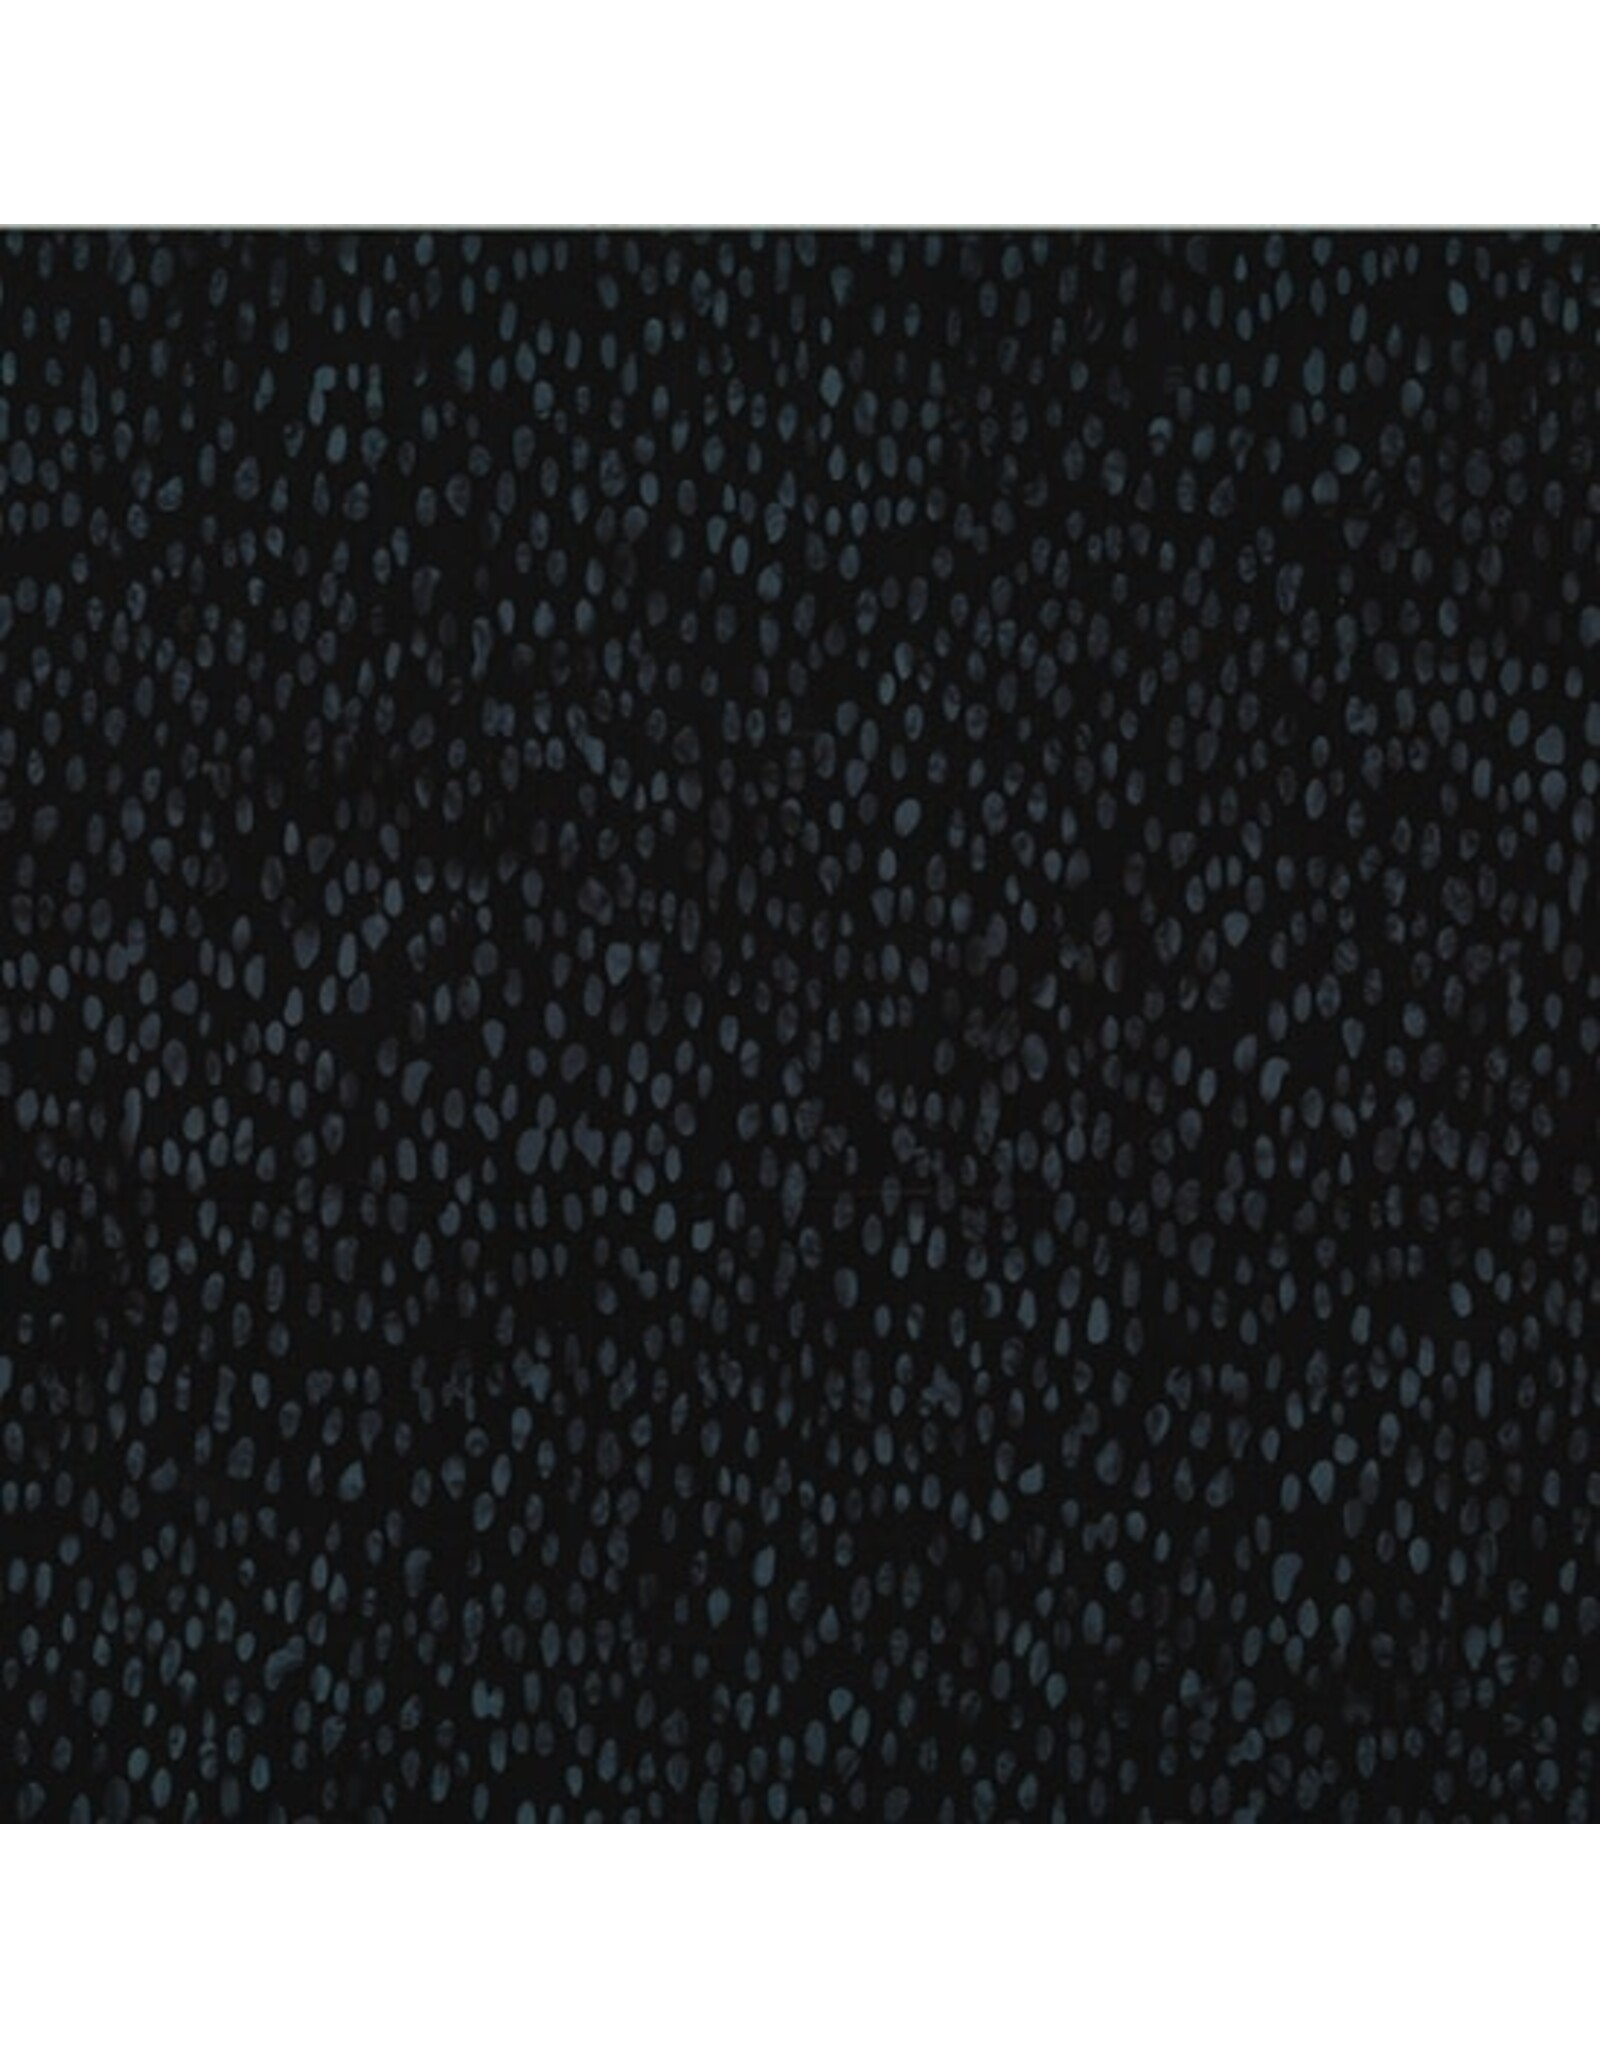 Hoffman Hoffman Fabrics - Bali Handpaints - Raindrops Black - V2528-4